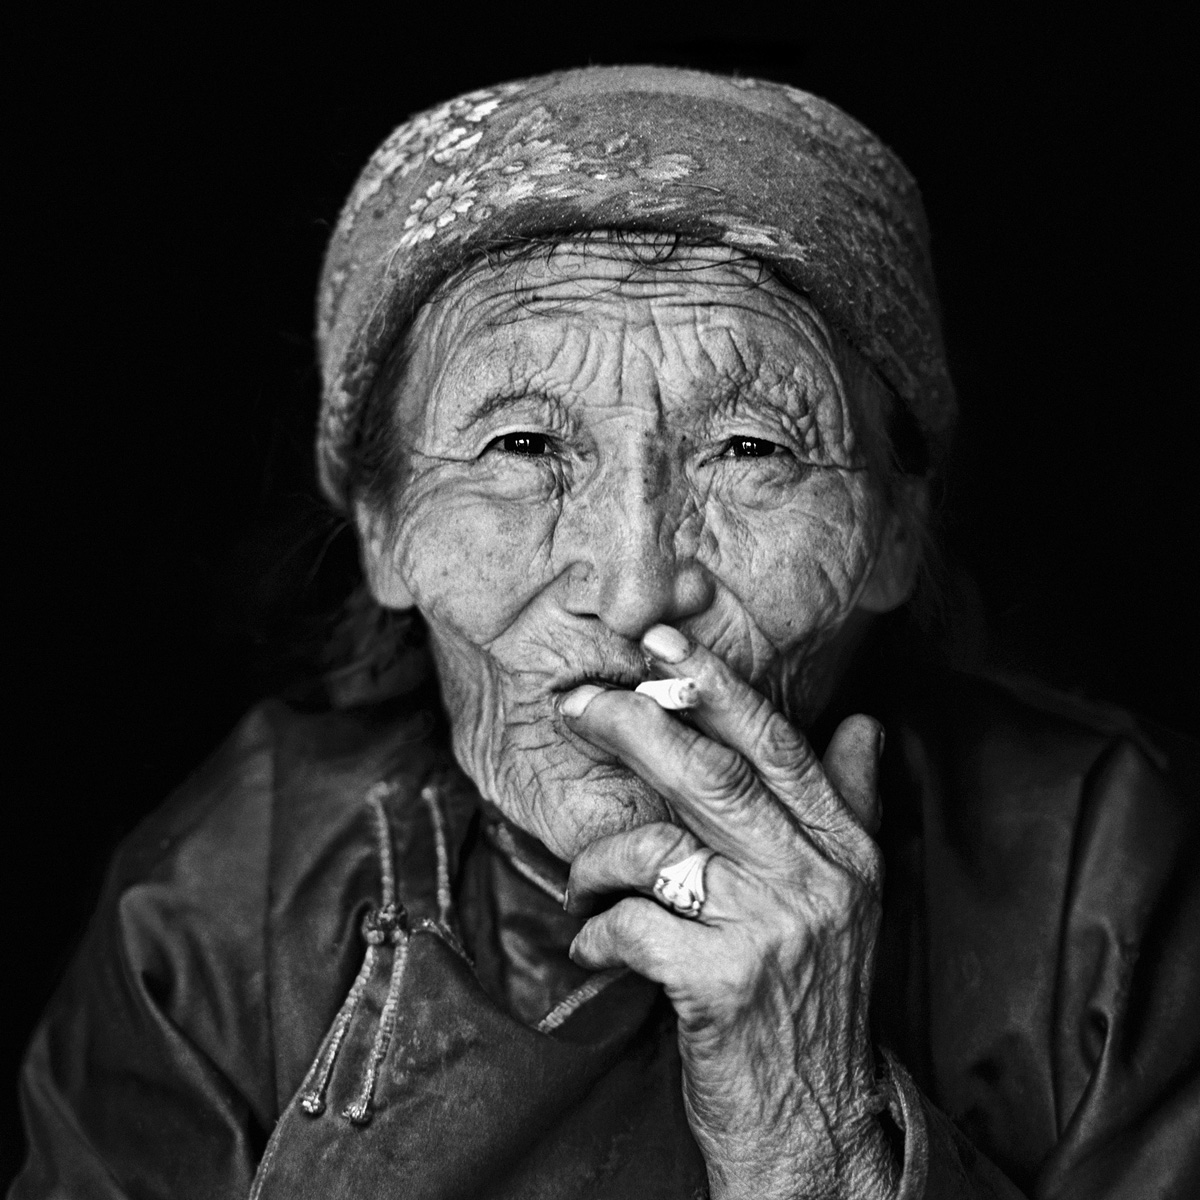 © Christine Turnauer, Presence - Punzel, Mongolia 2013